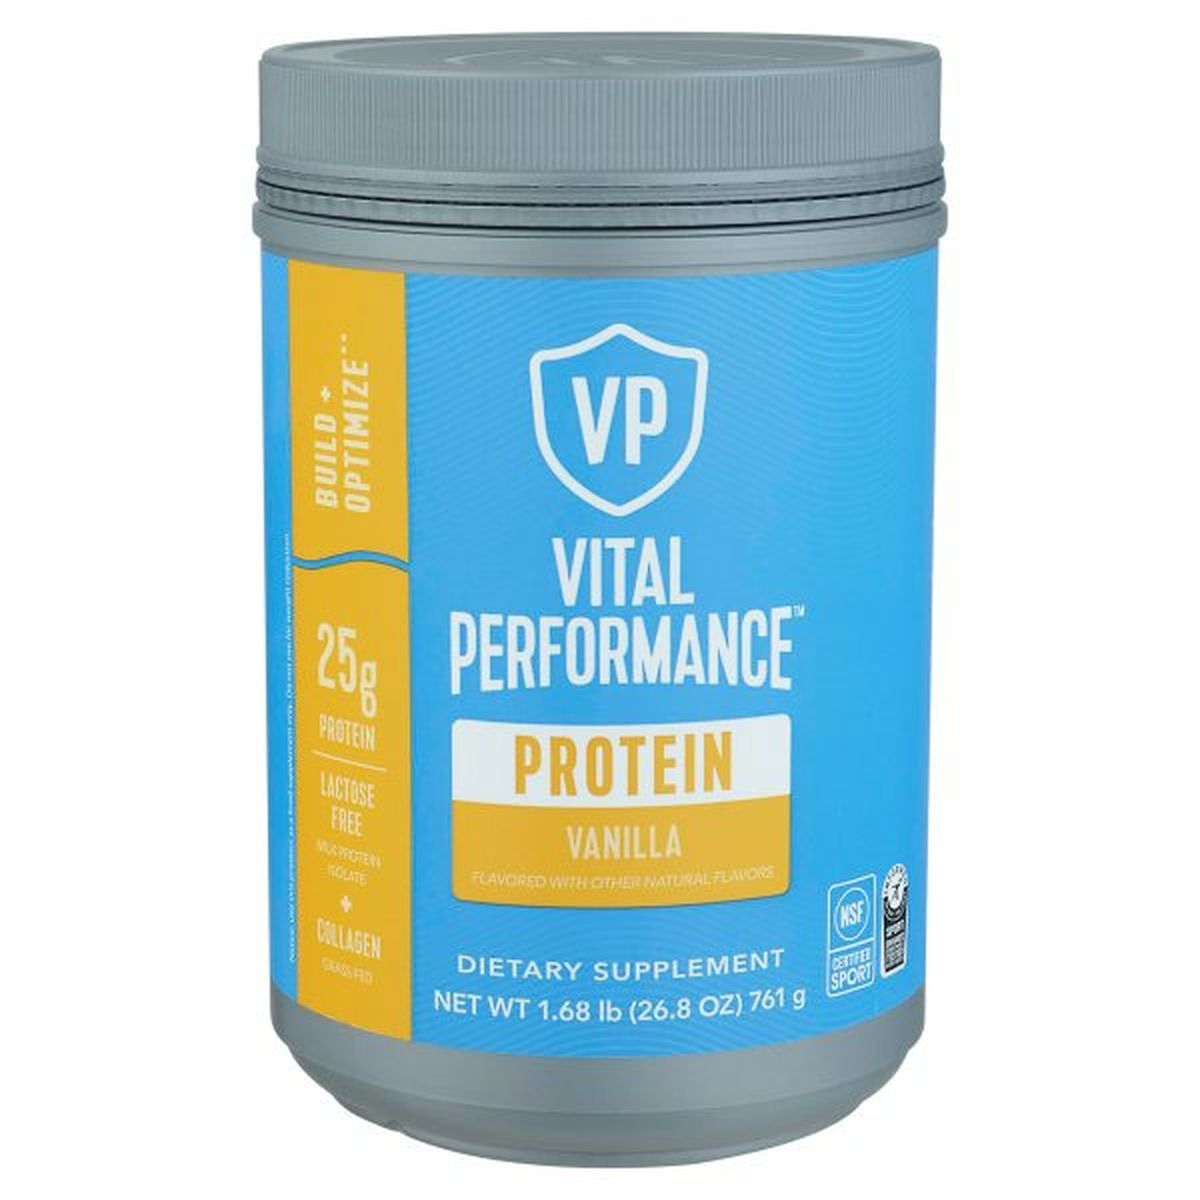 Calories in Vital Performance Protein, Vanilla